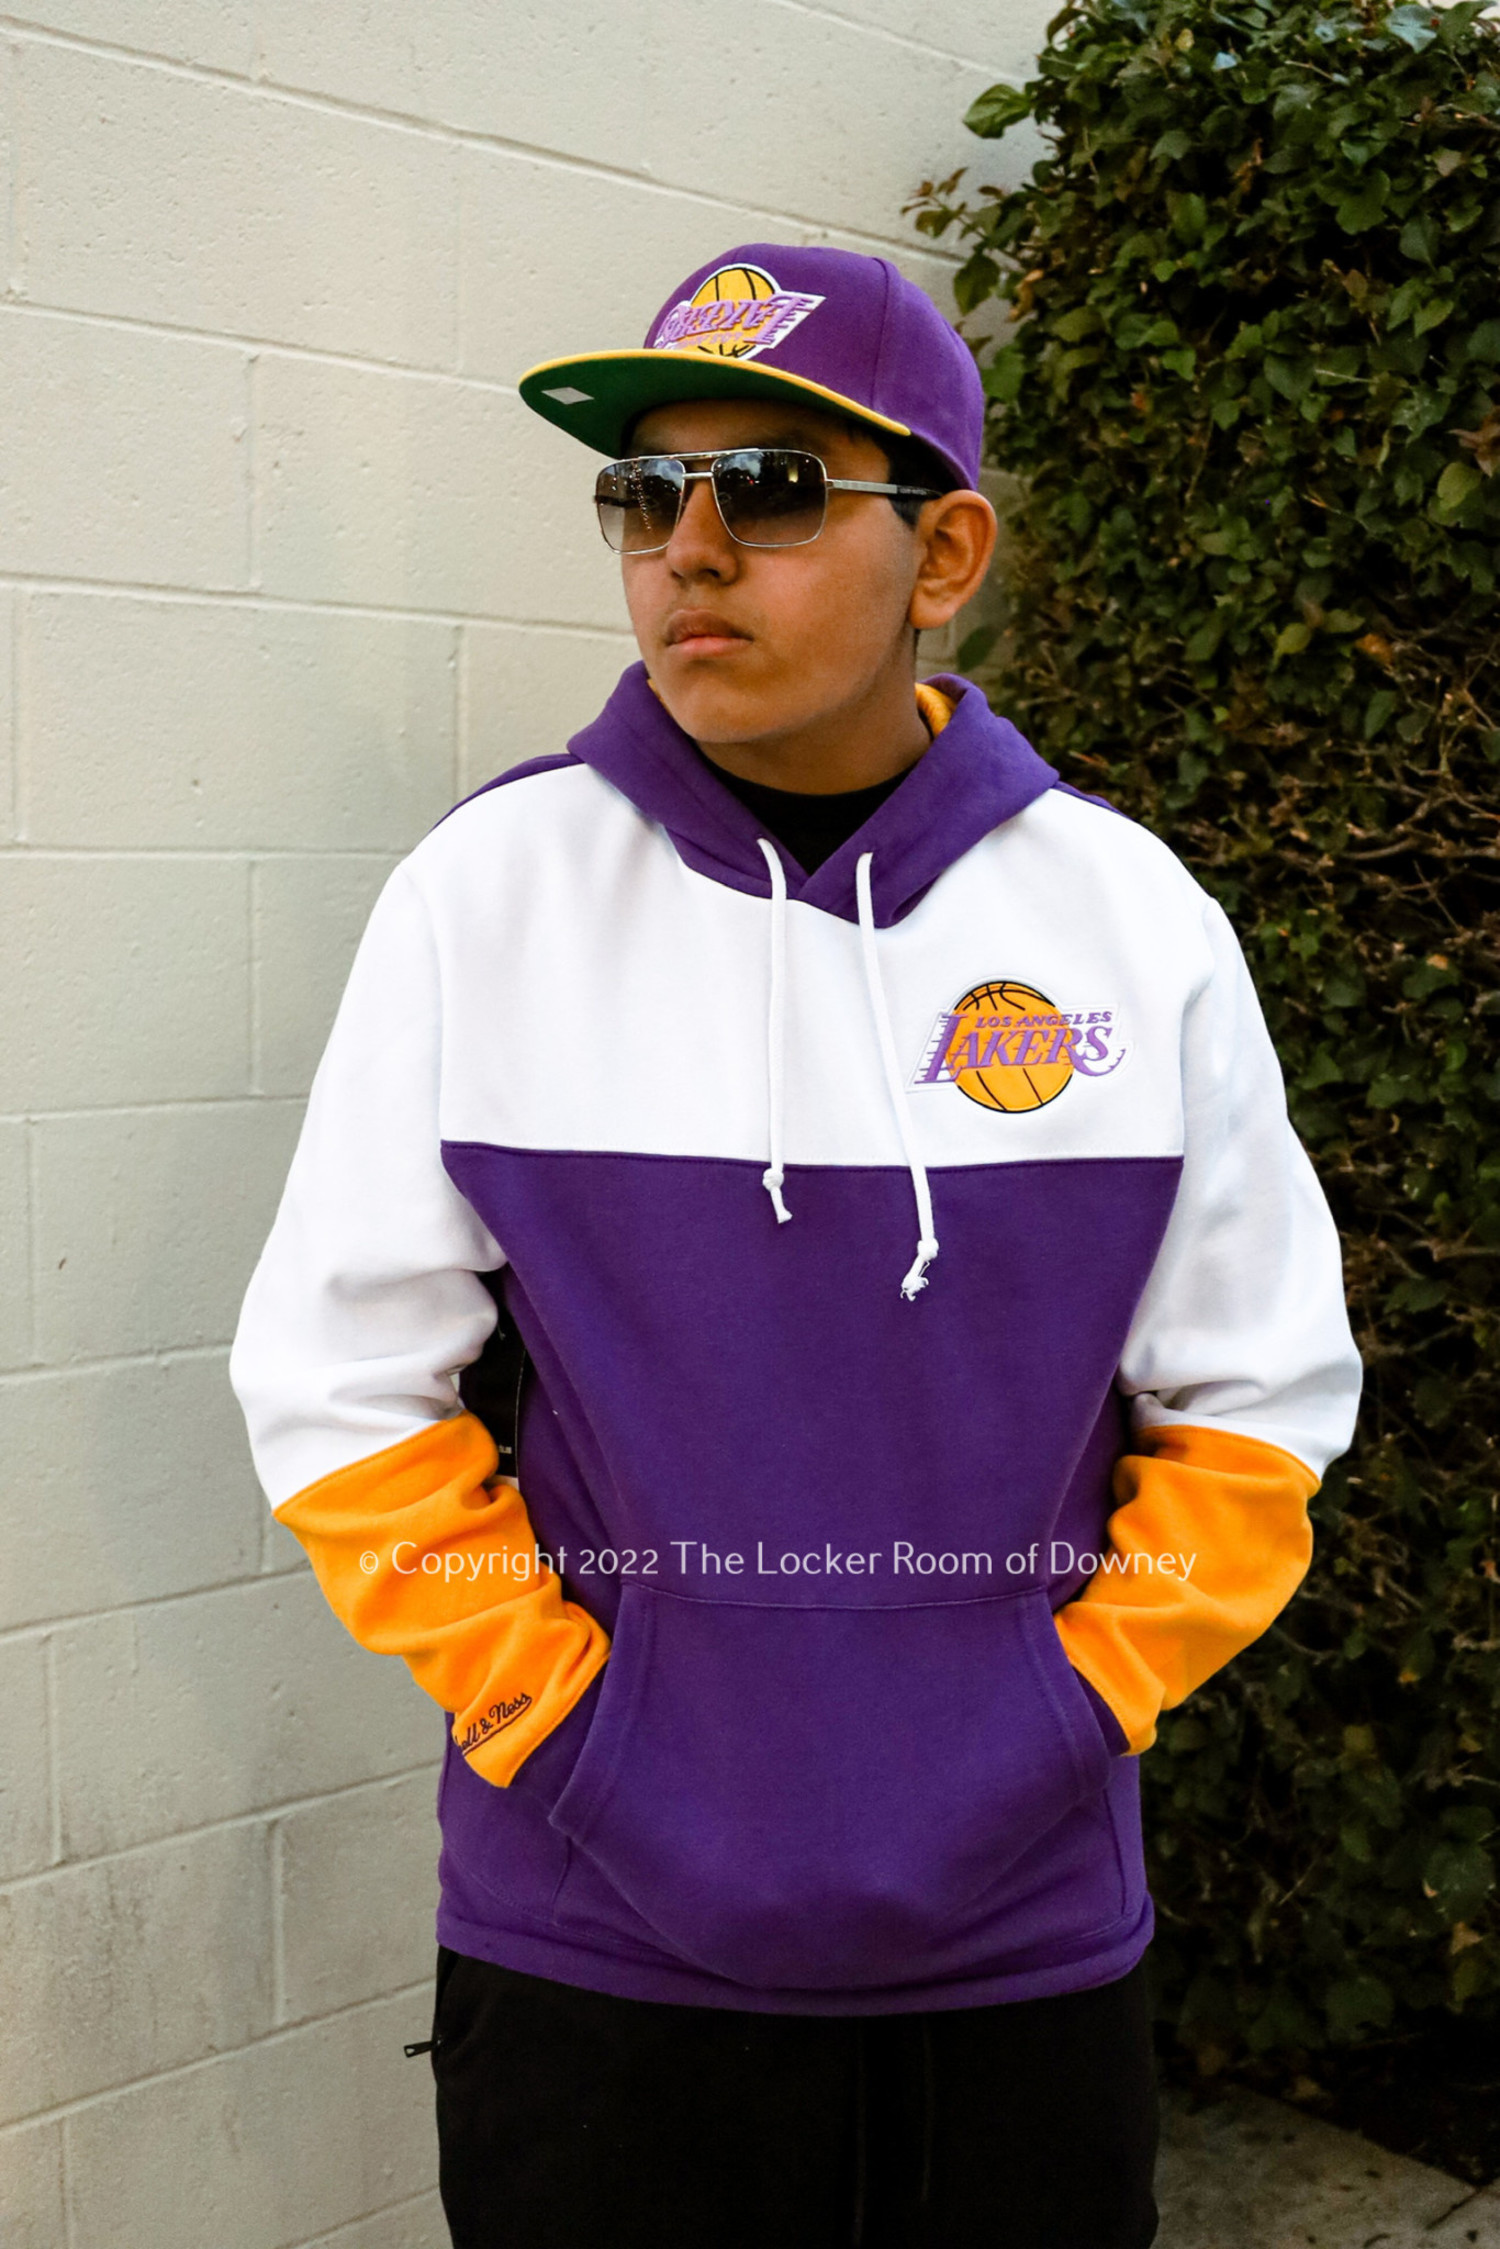 Mitchell & Ness LA Lakers Hoodie